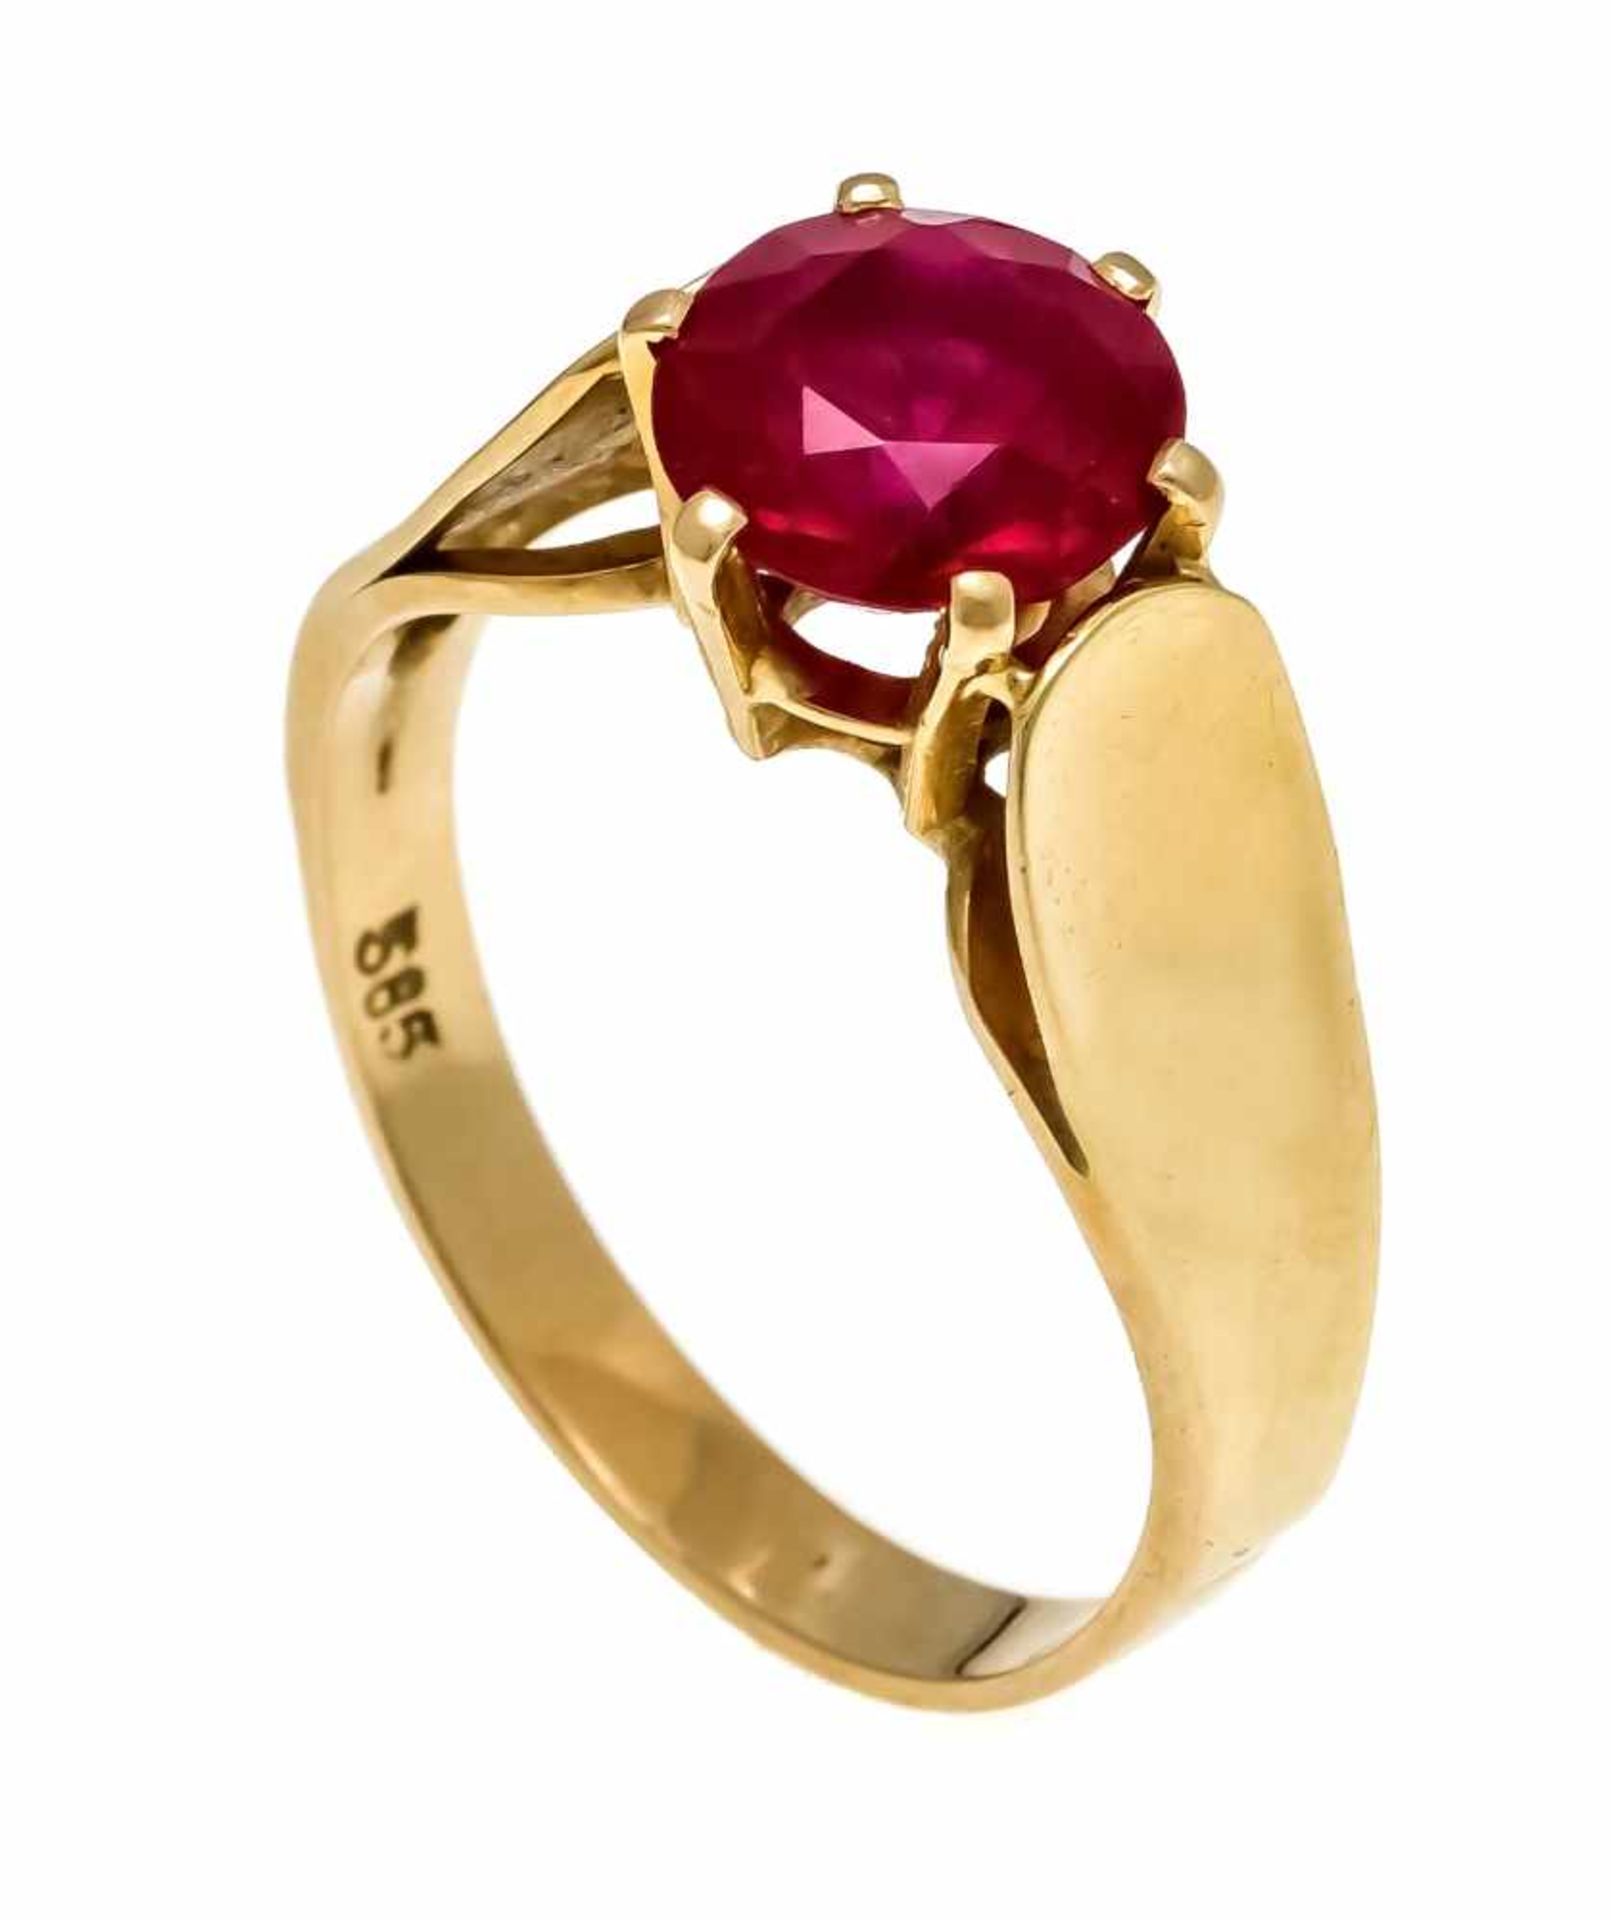 Synth.Rubin-Ring GG 585/000 mit einem rund fac. synt. Rubin 8,0 mm, RG 57, 3,8 gSynthetic ruby ring,